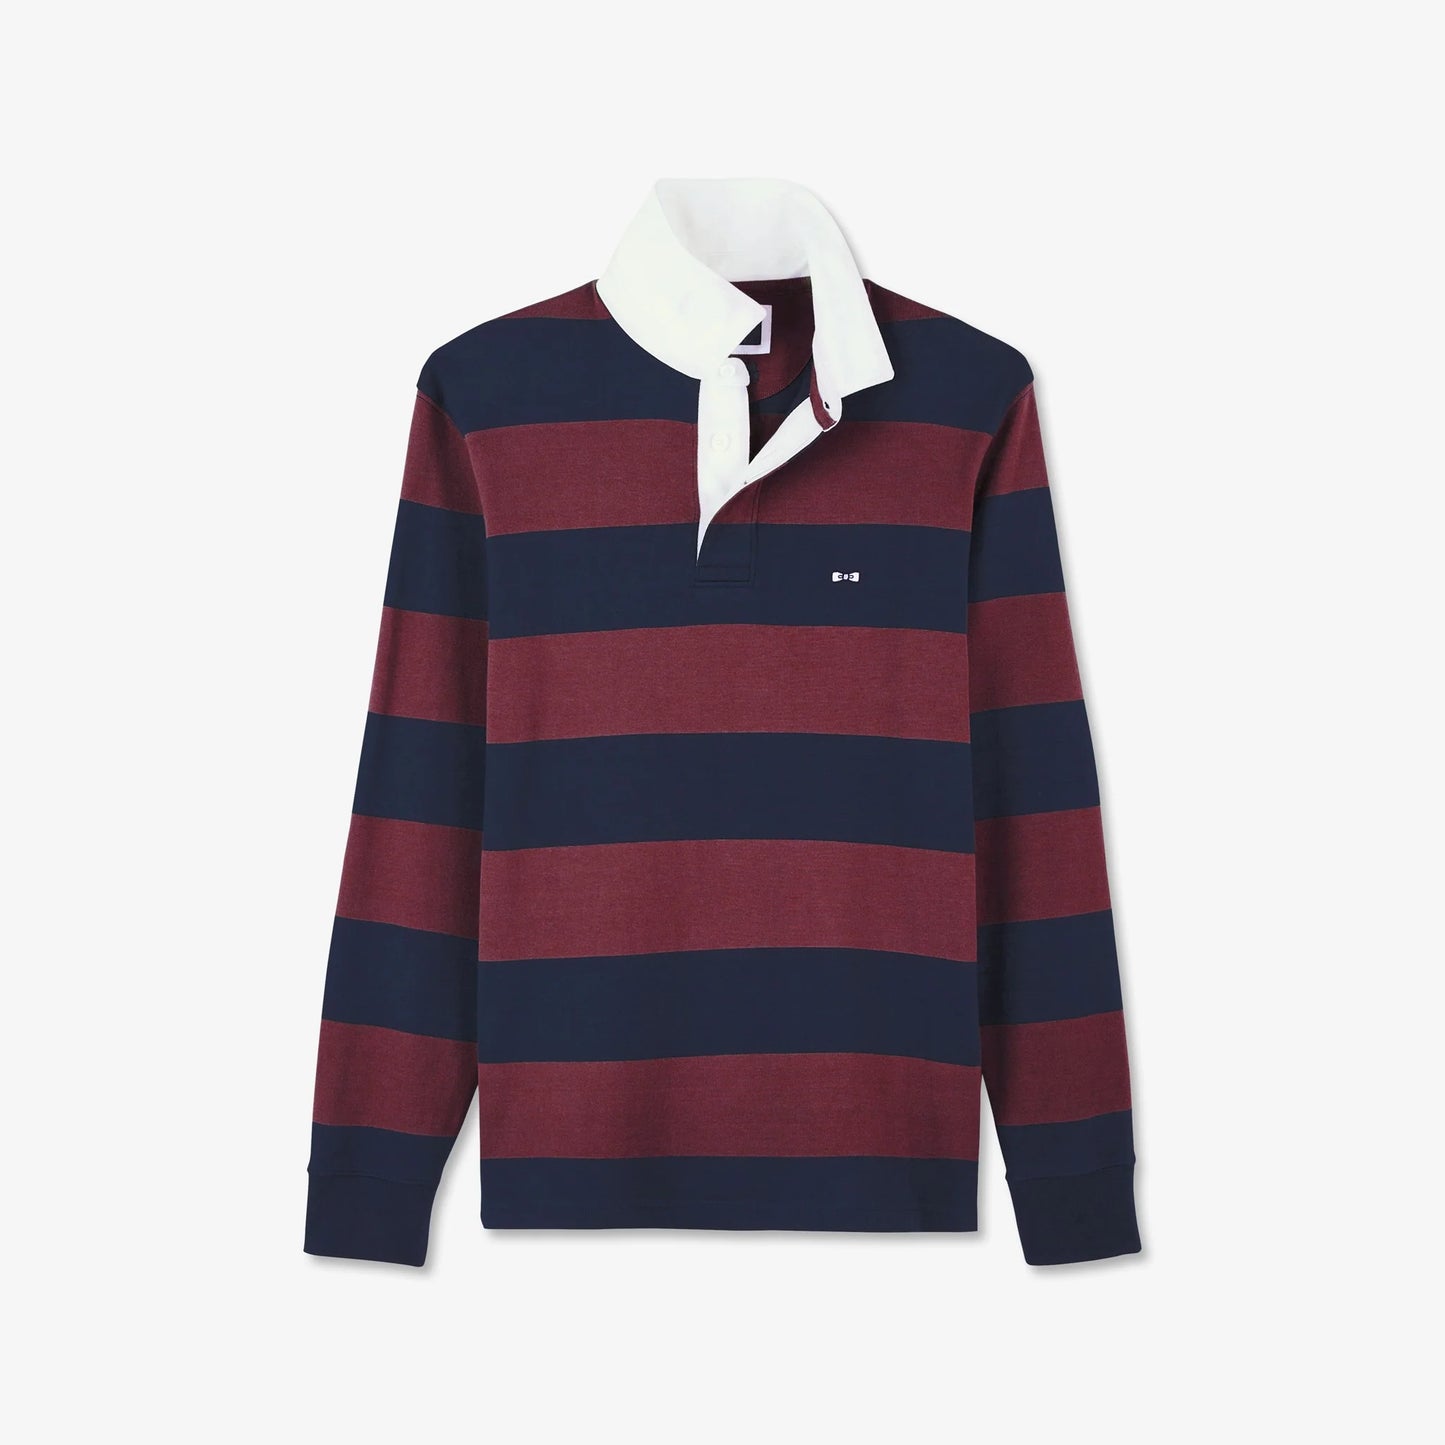 Eden Park Long-Sleeved Rugby Shirt